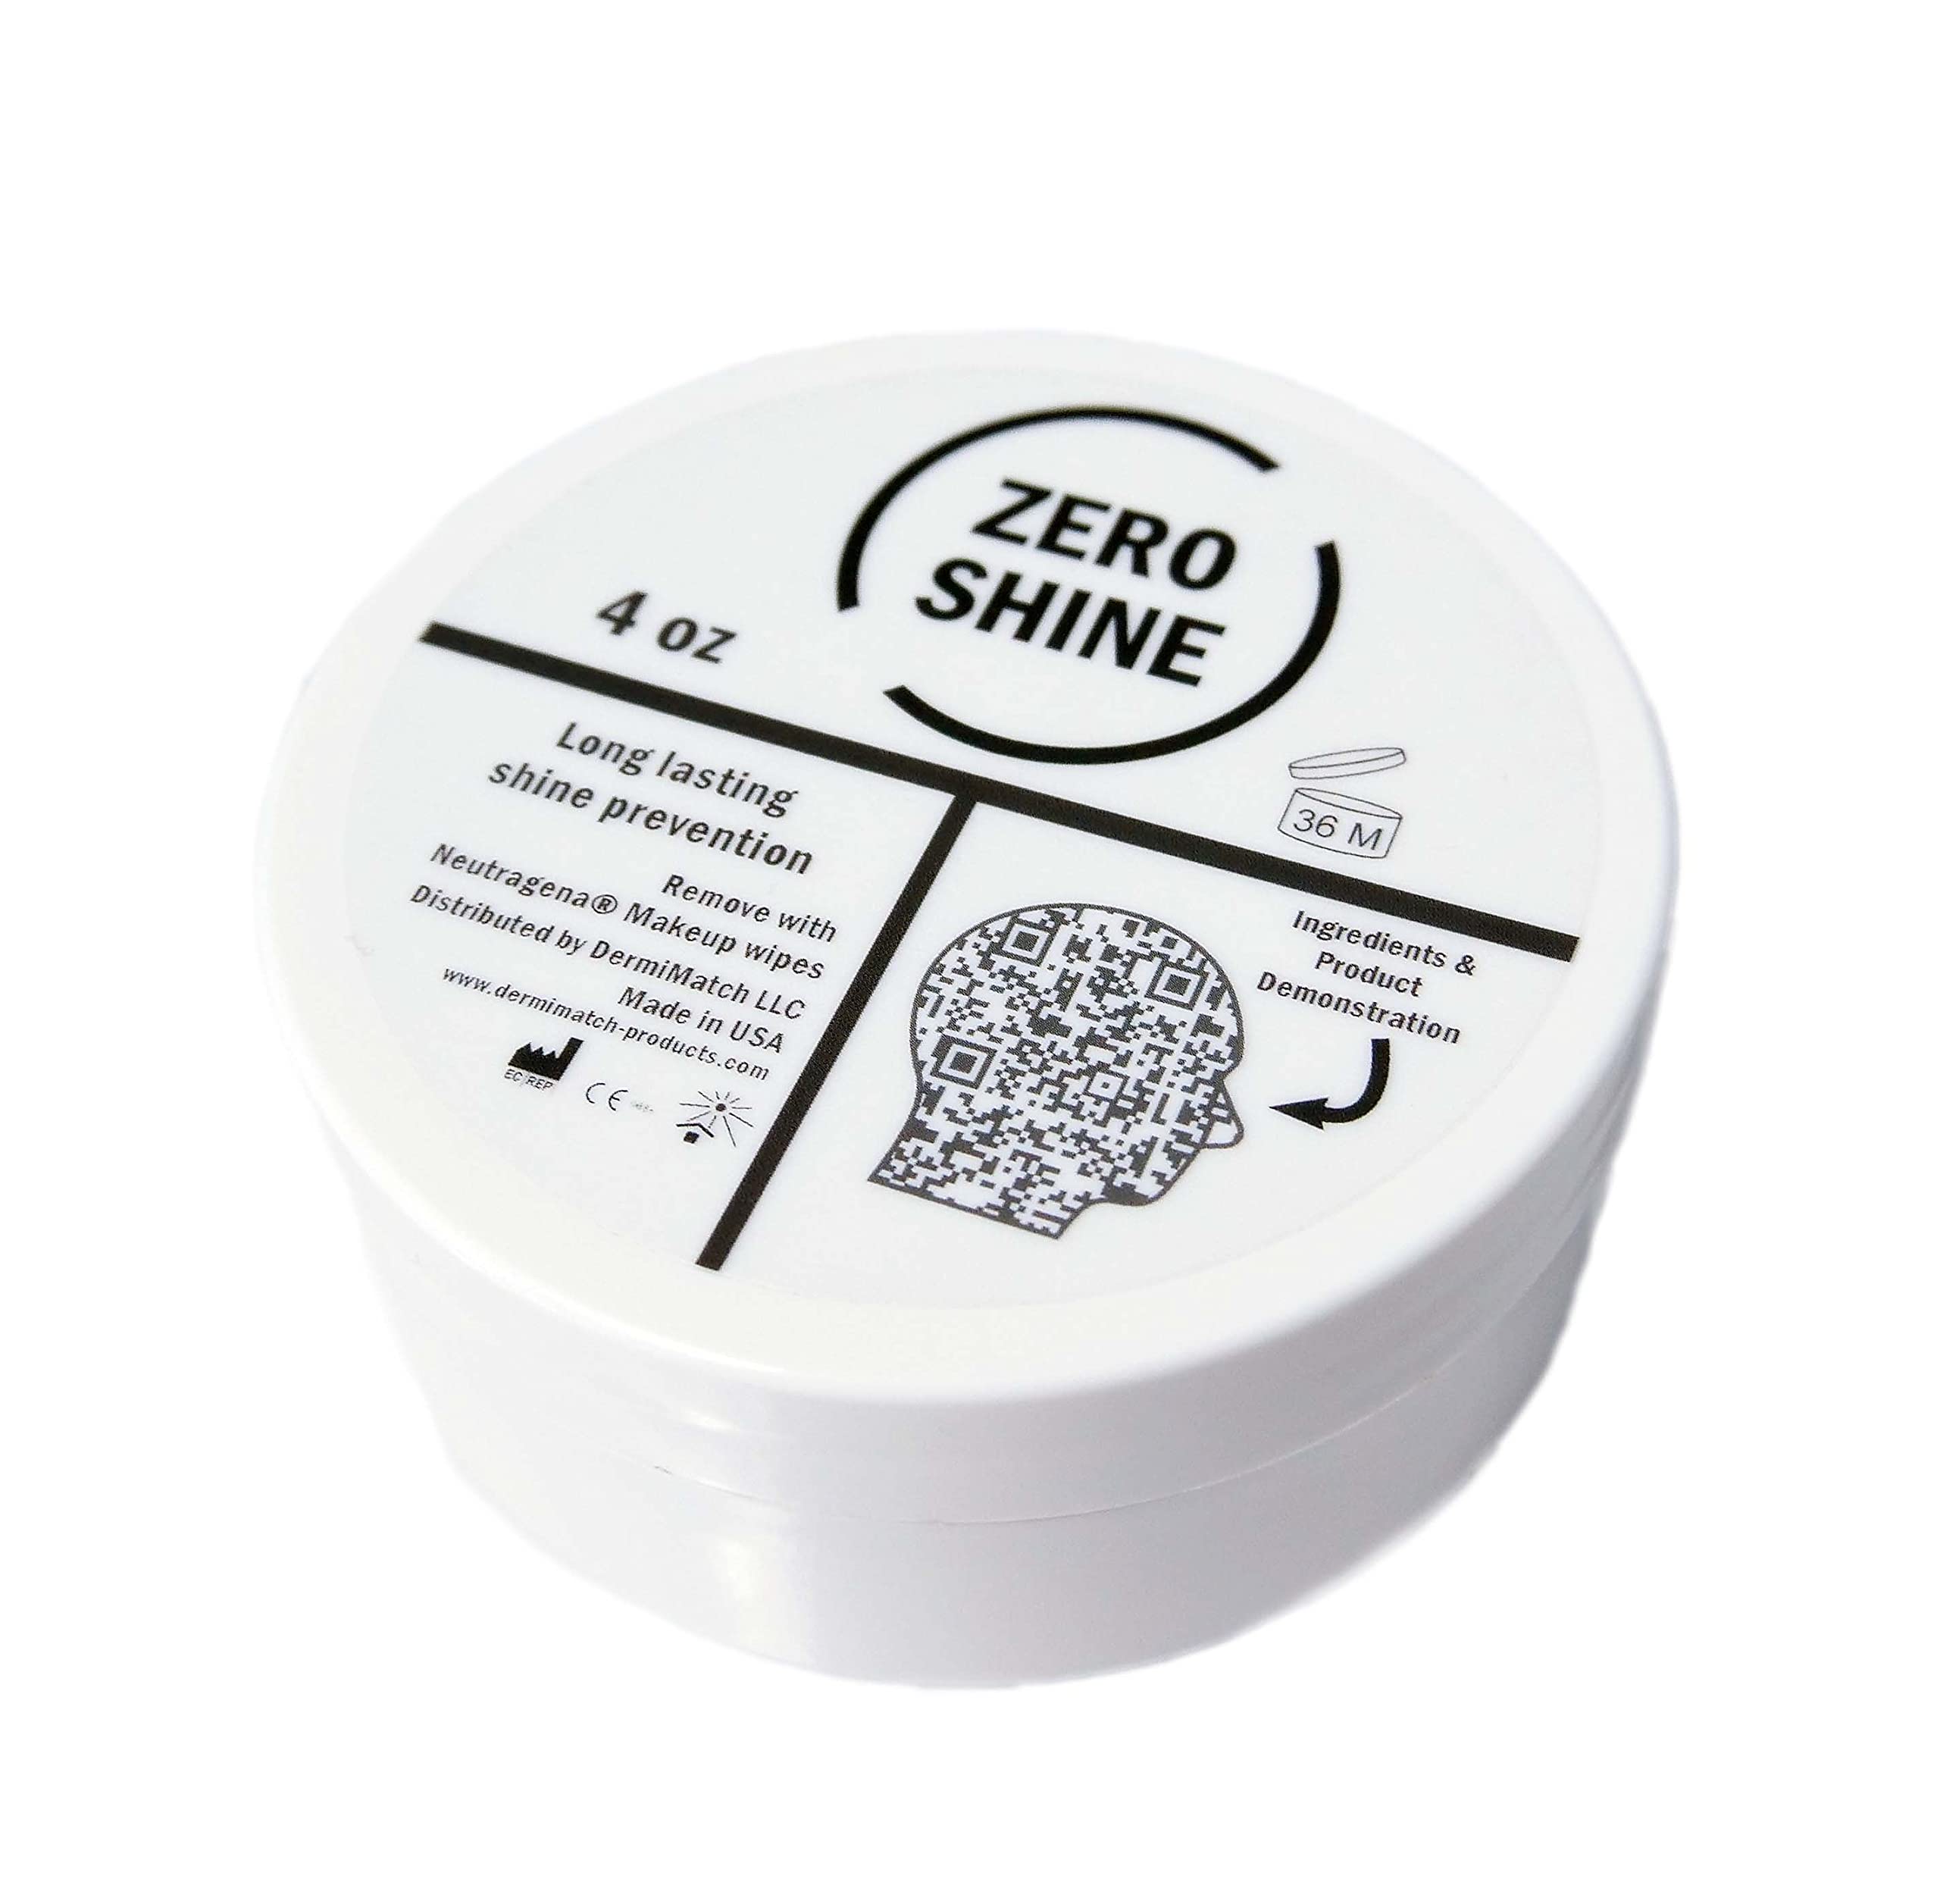 Zero Shine matte lotion for a scalp mattifying effect on oily shiny skin smp scalp micropigmentation